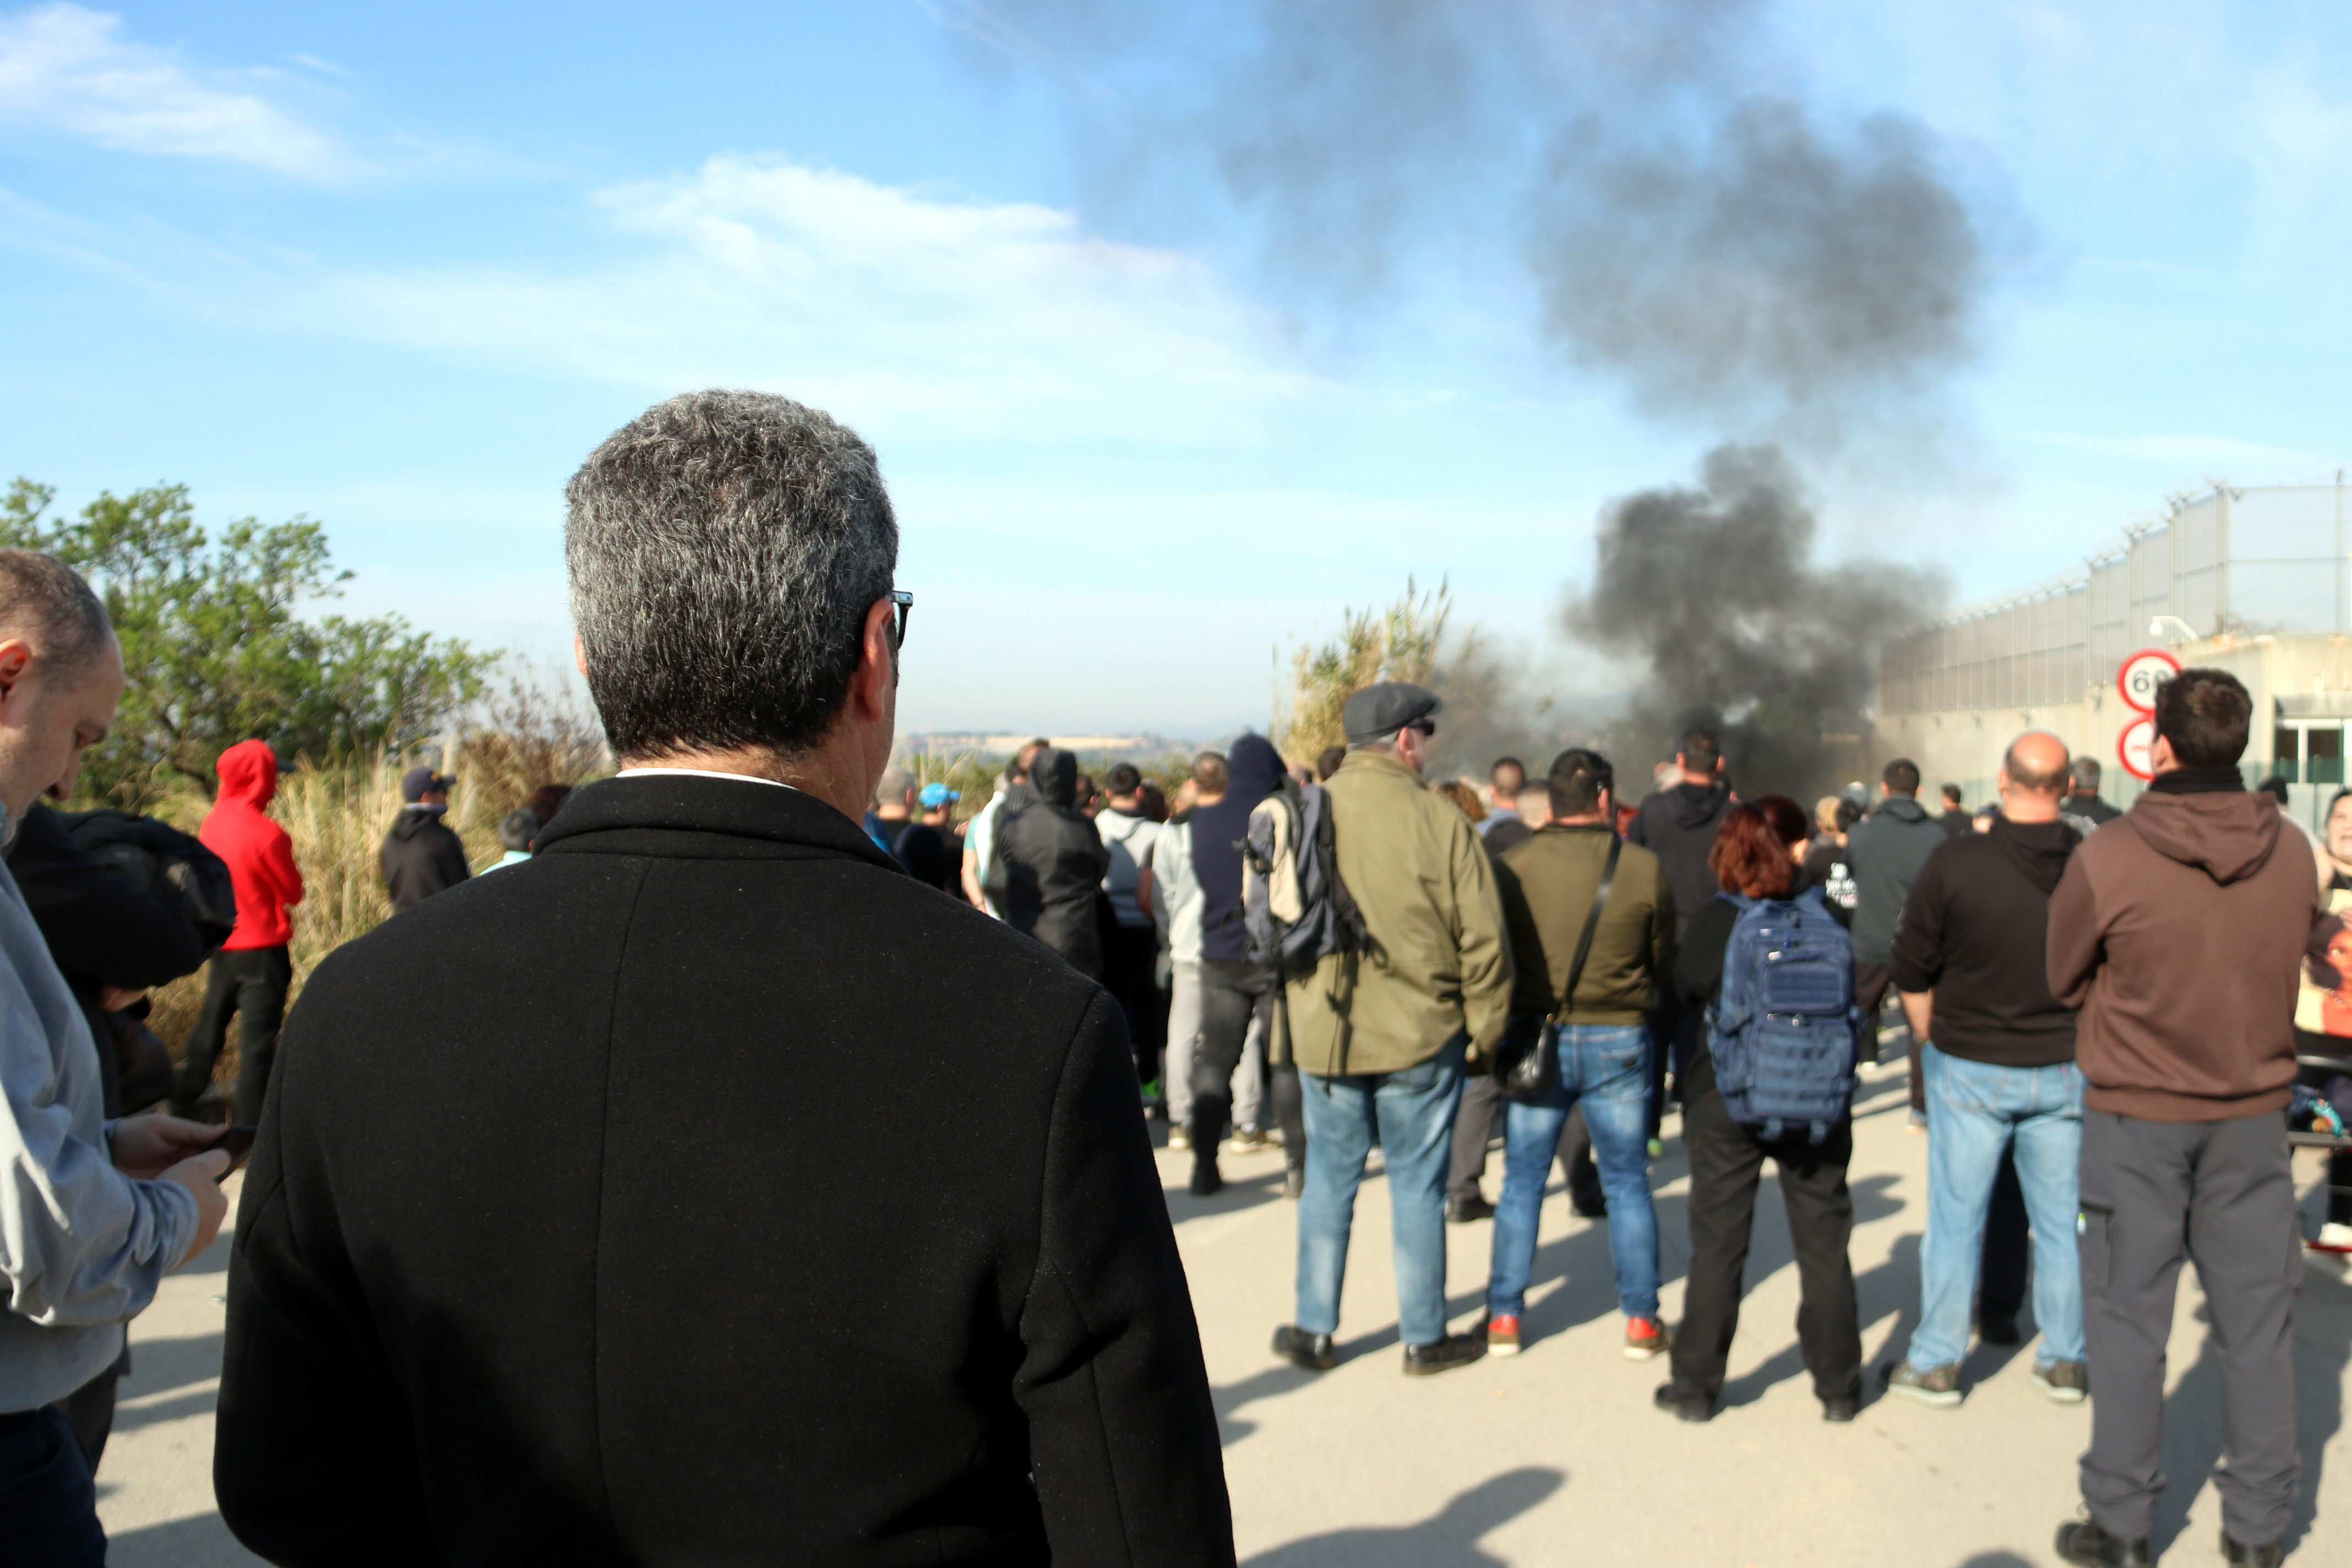 Quatre Camins prison director addresses demonstrators